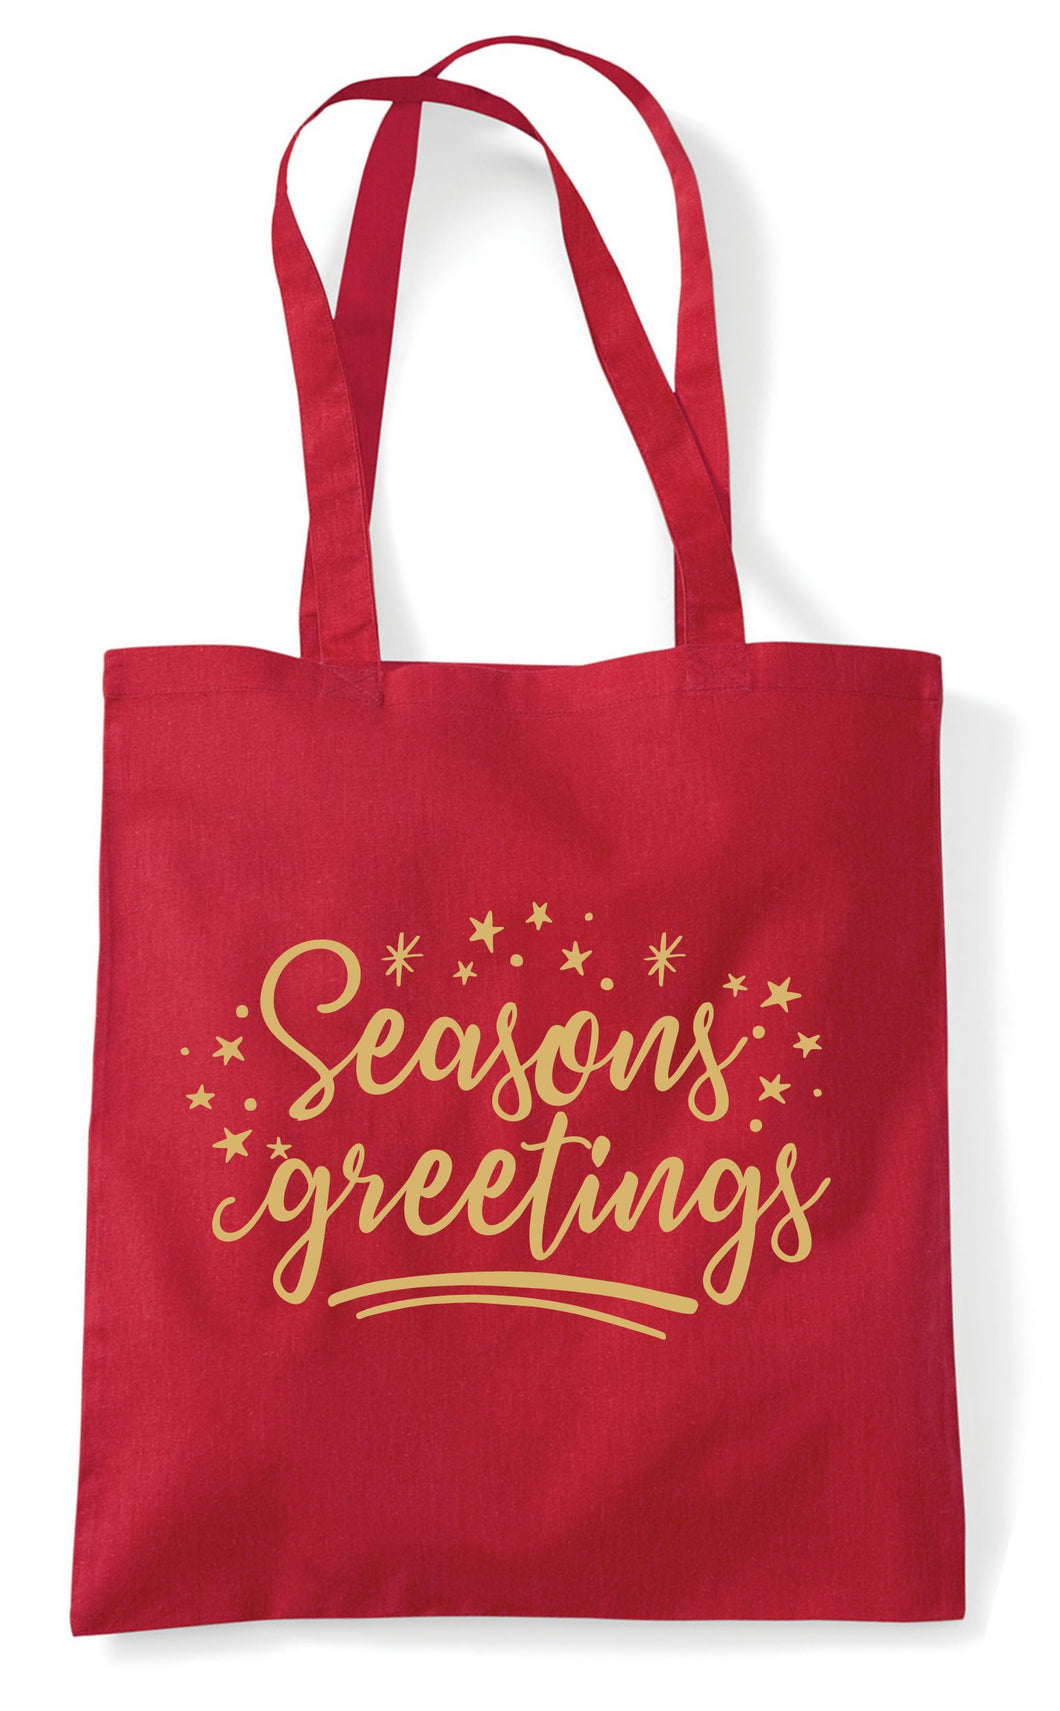 Christmas Tote Bag (Seasons Greetings)